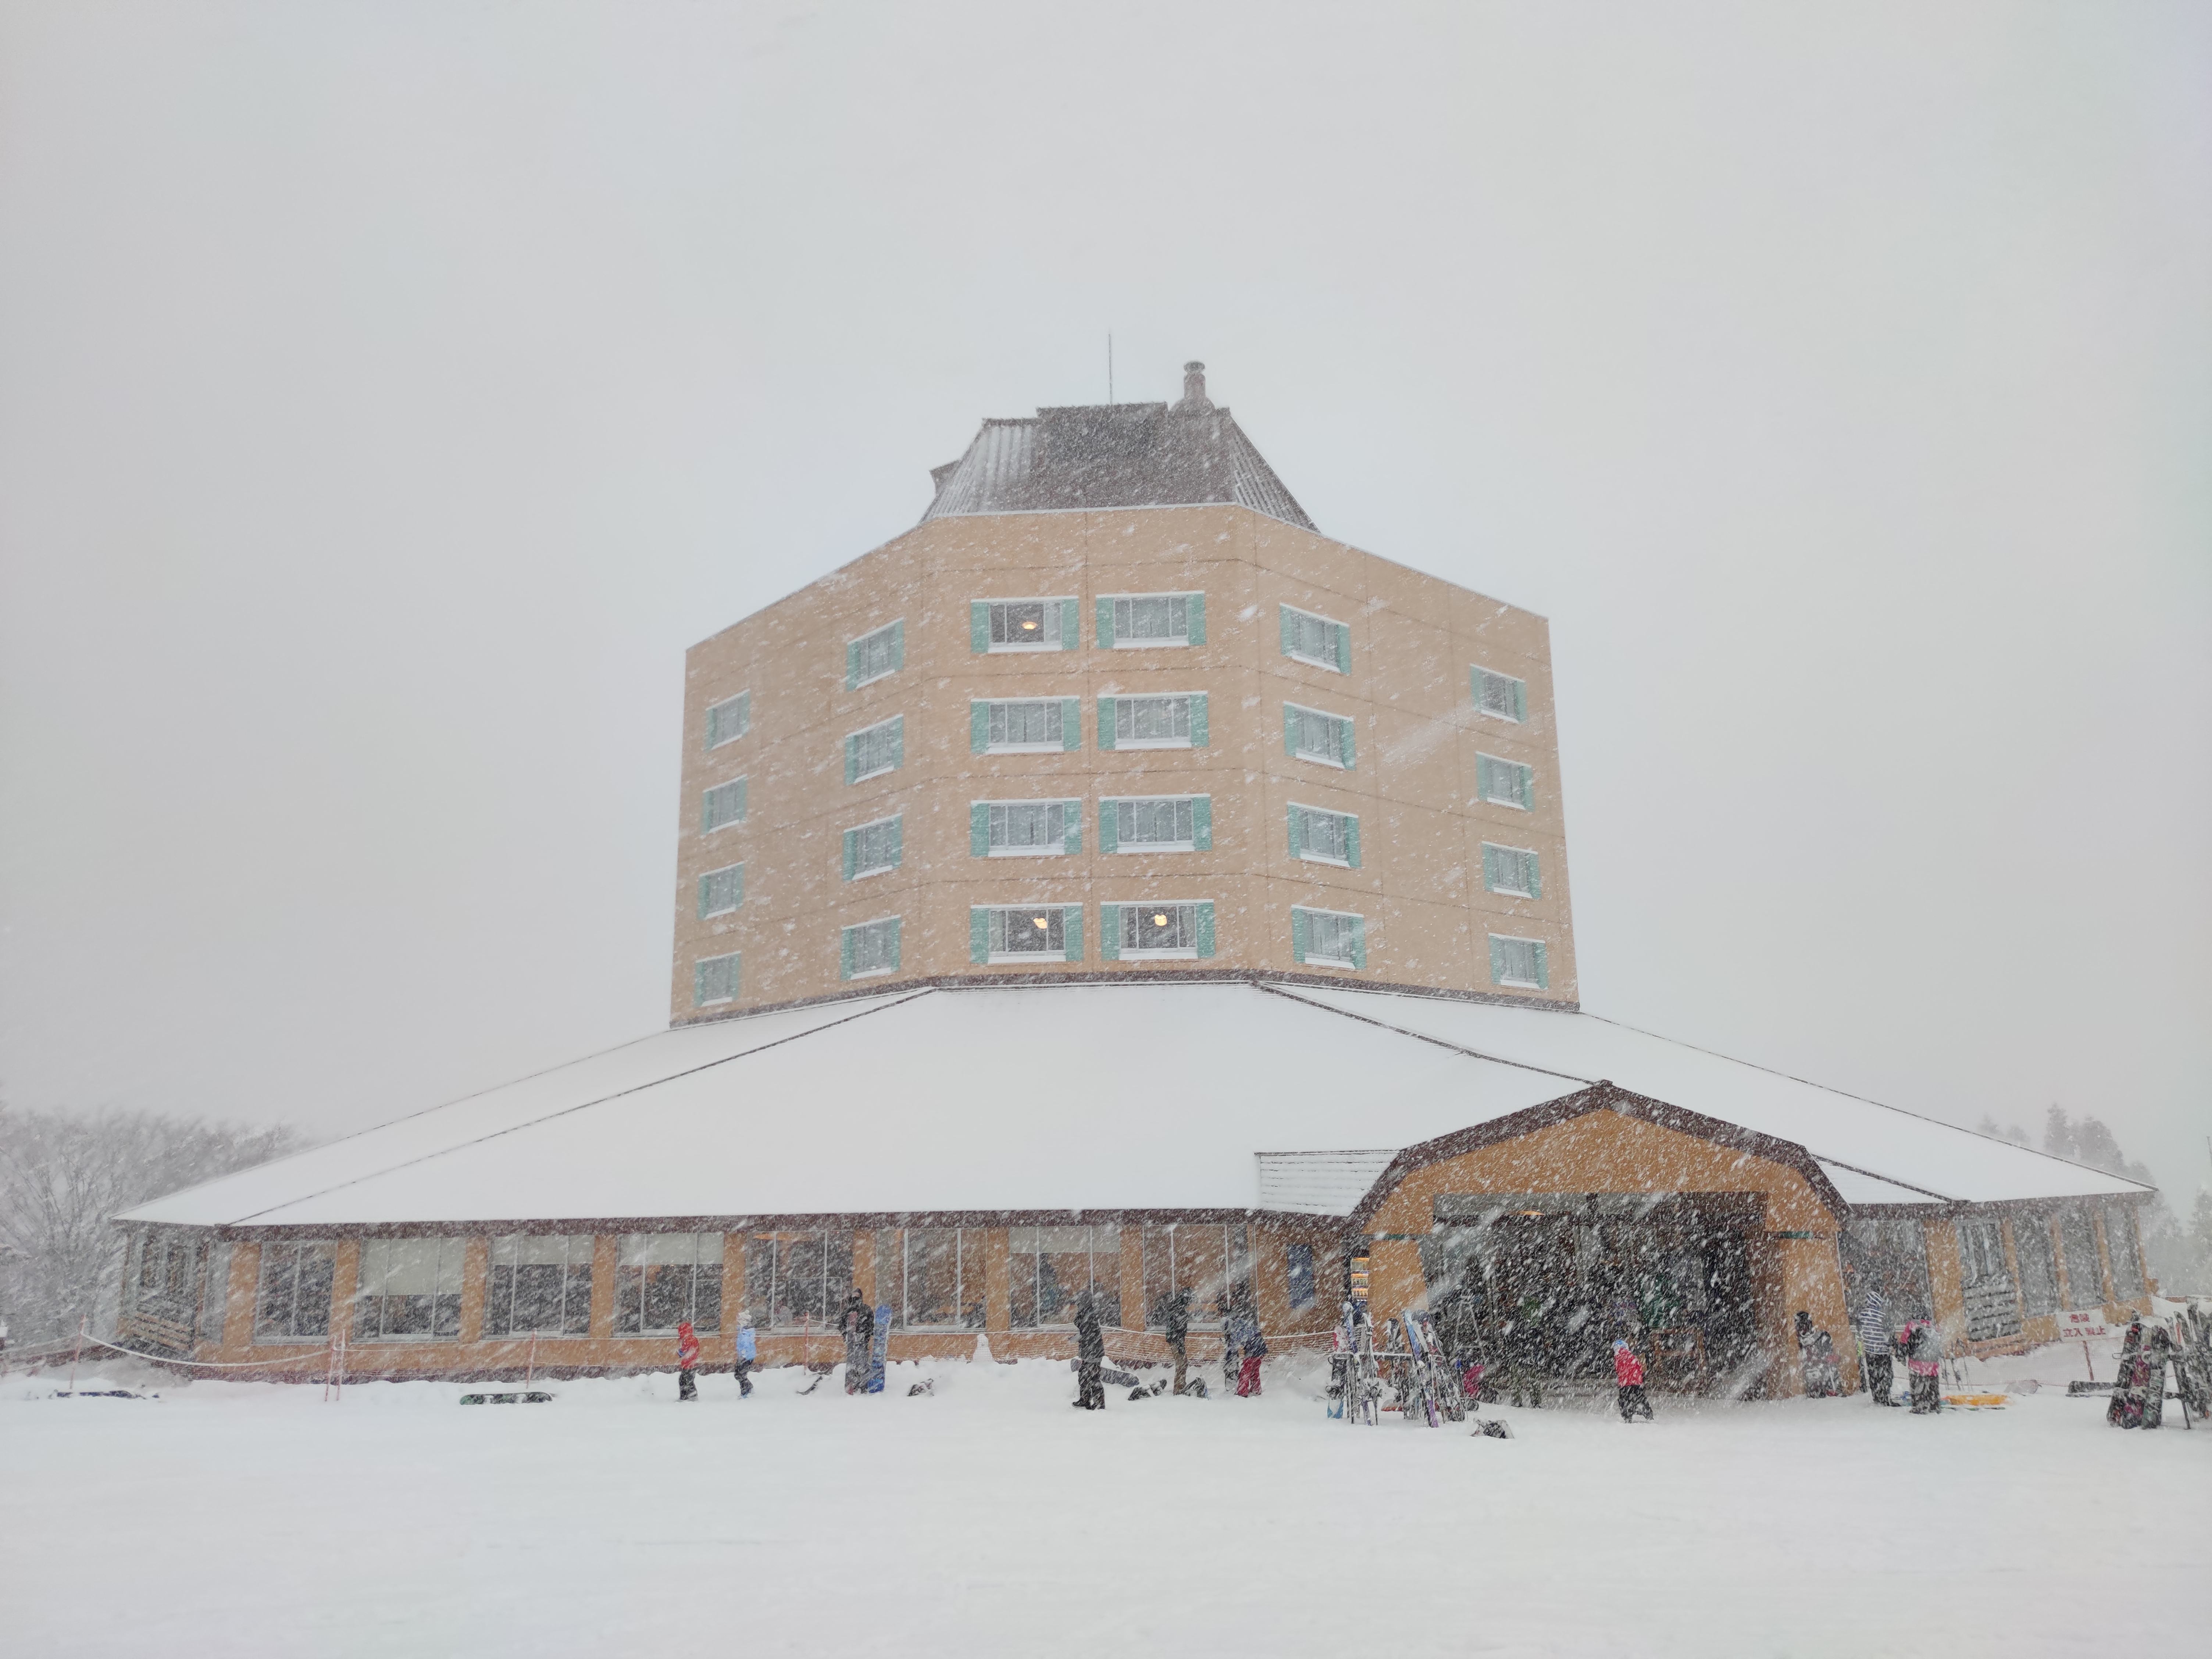 Maiko Kogen Hotel at the base of the slopes., Maiko Snow Resort